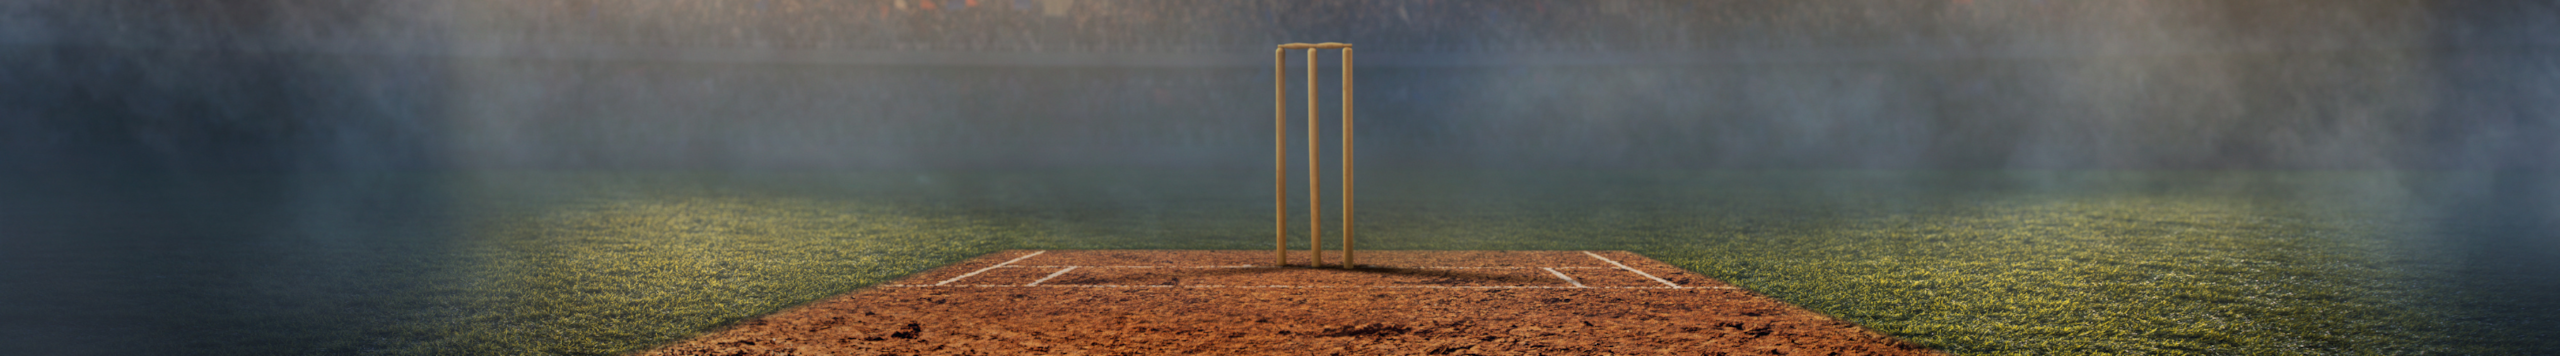 Cricket Wellington Cancellations Image of stumps